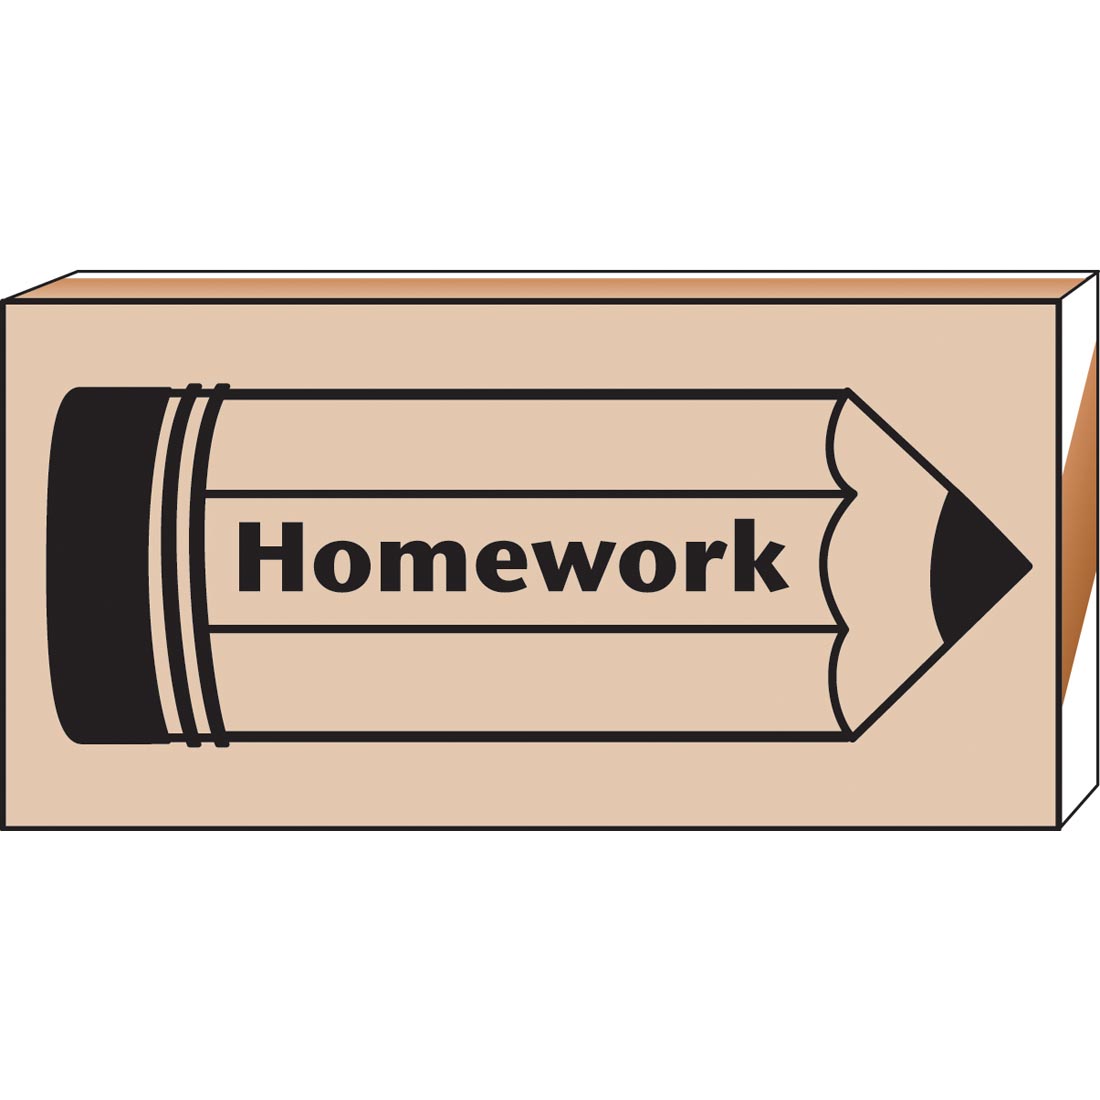 Homework Rubber Stamp